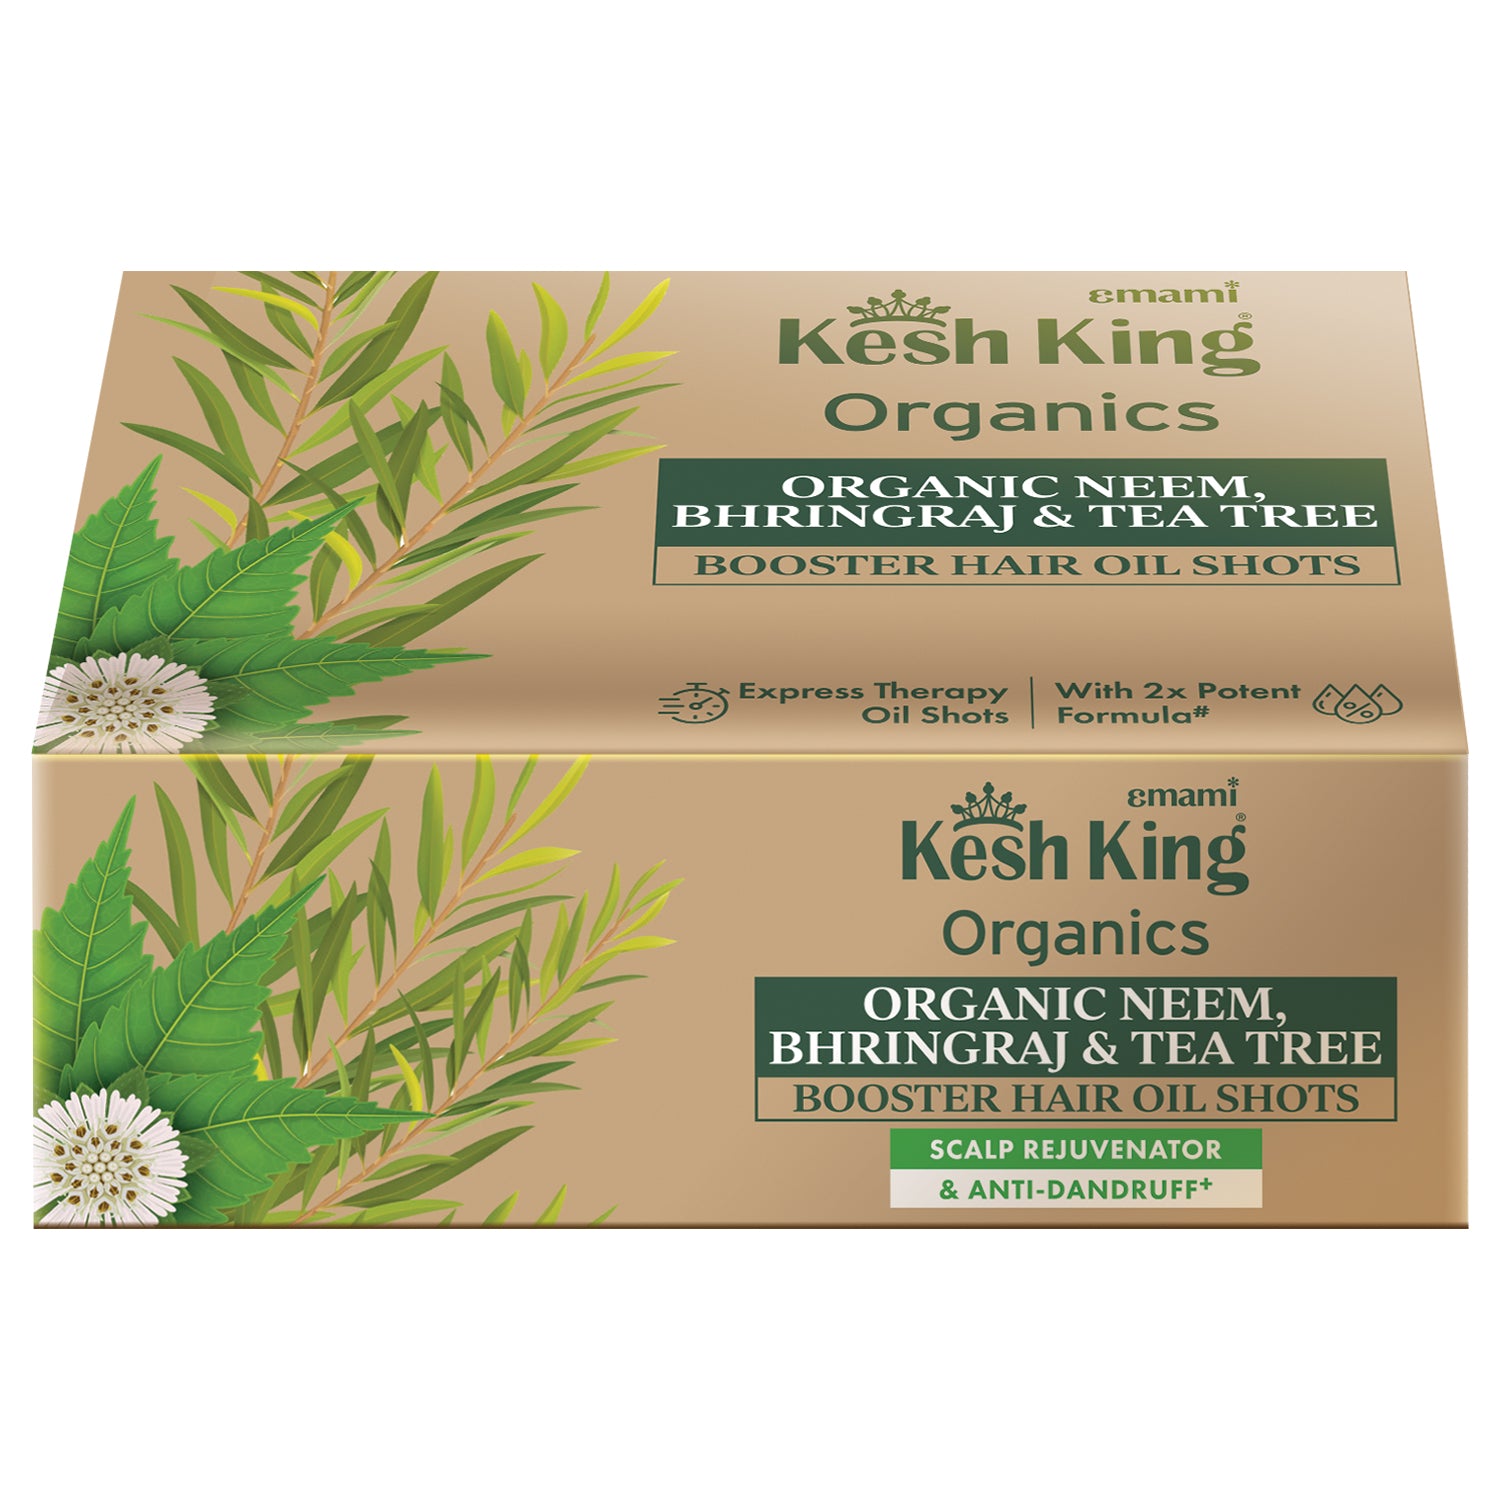 Kesh King Organics Neem, Bhringraj & Tea Tree Booster Hair Oil Shots